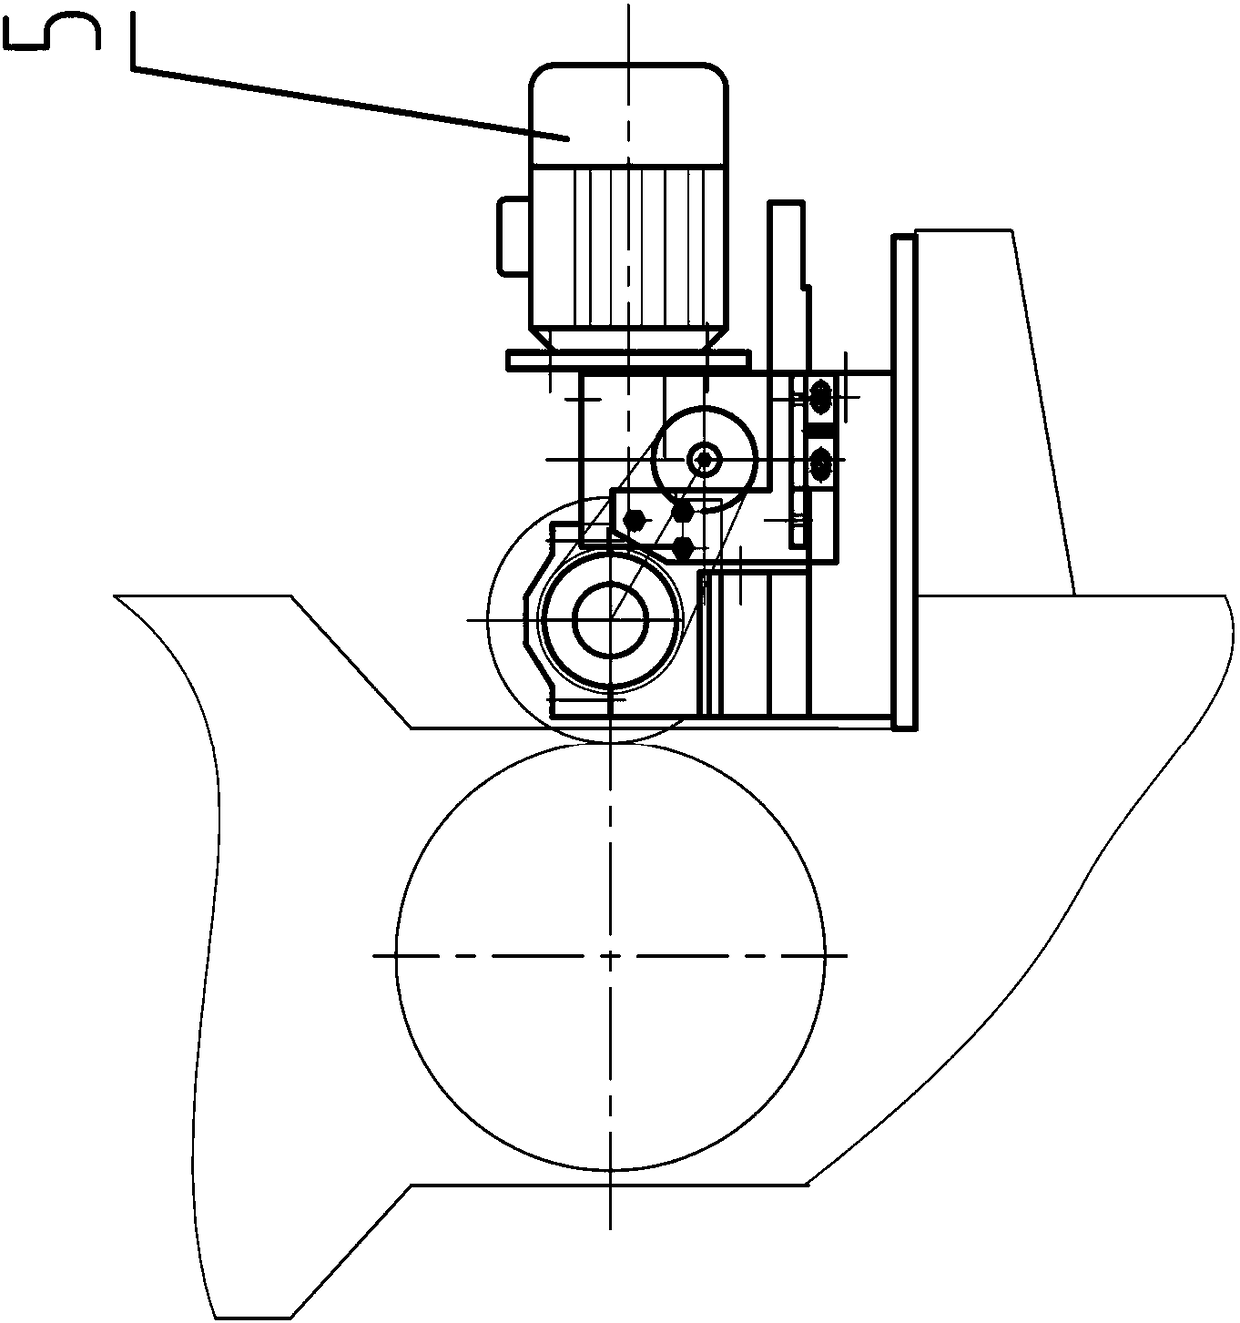 Anilox roller pretreatment device